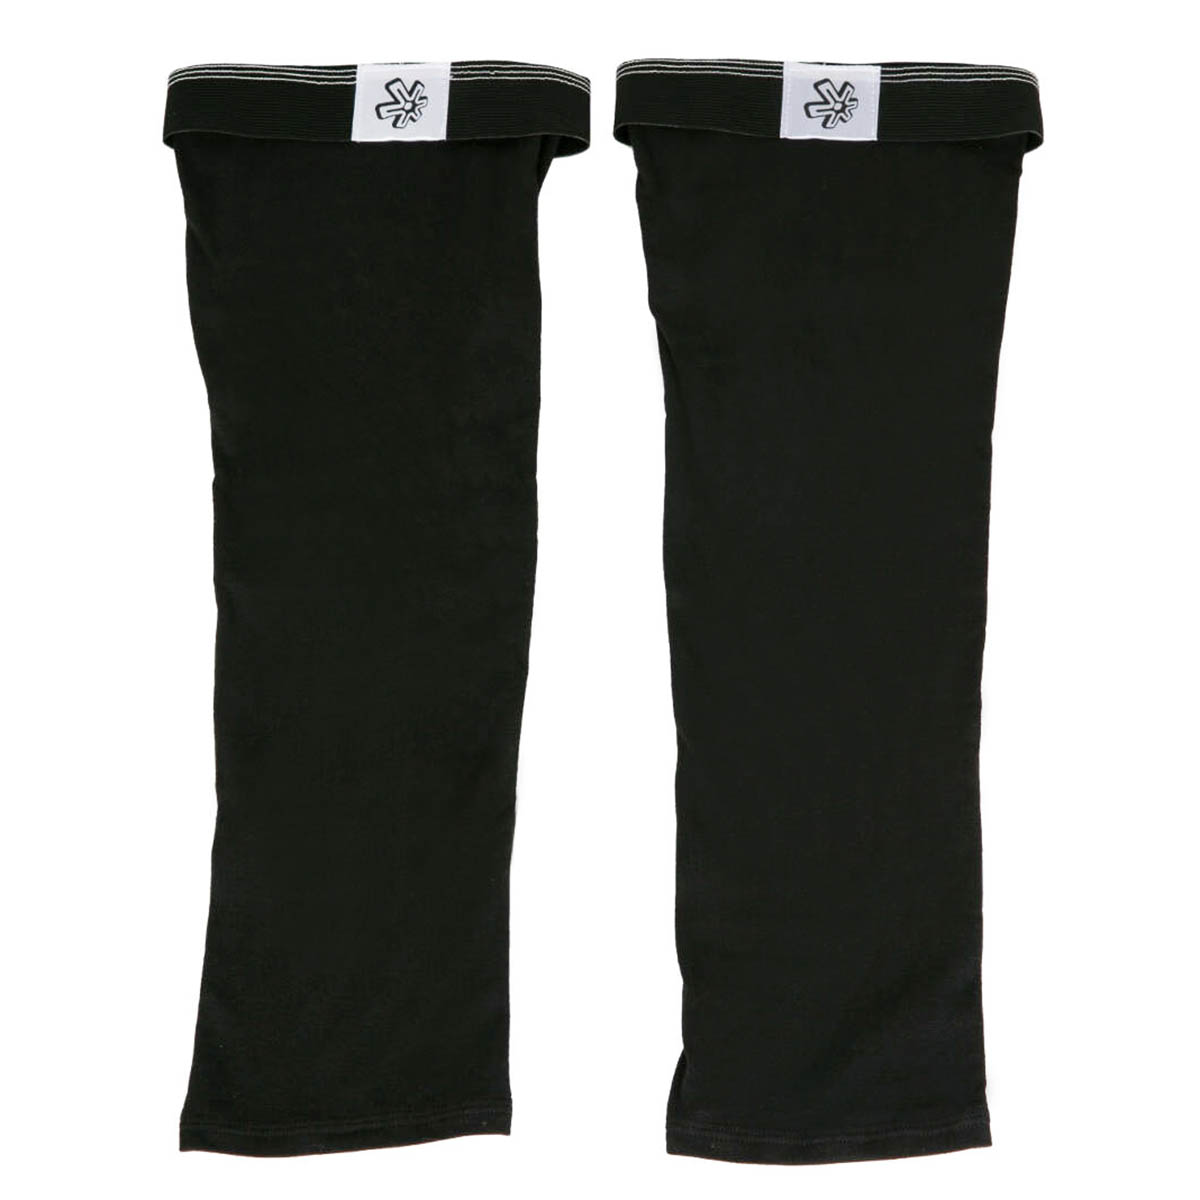 Asterisk Knee Brace Stockings  Black